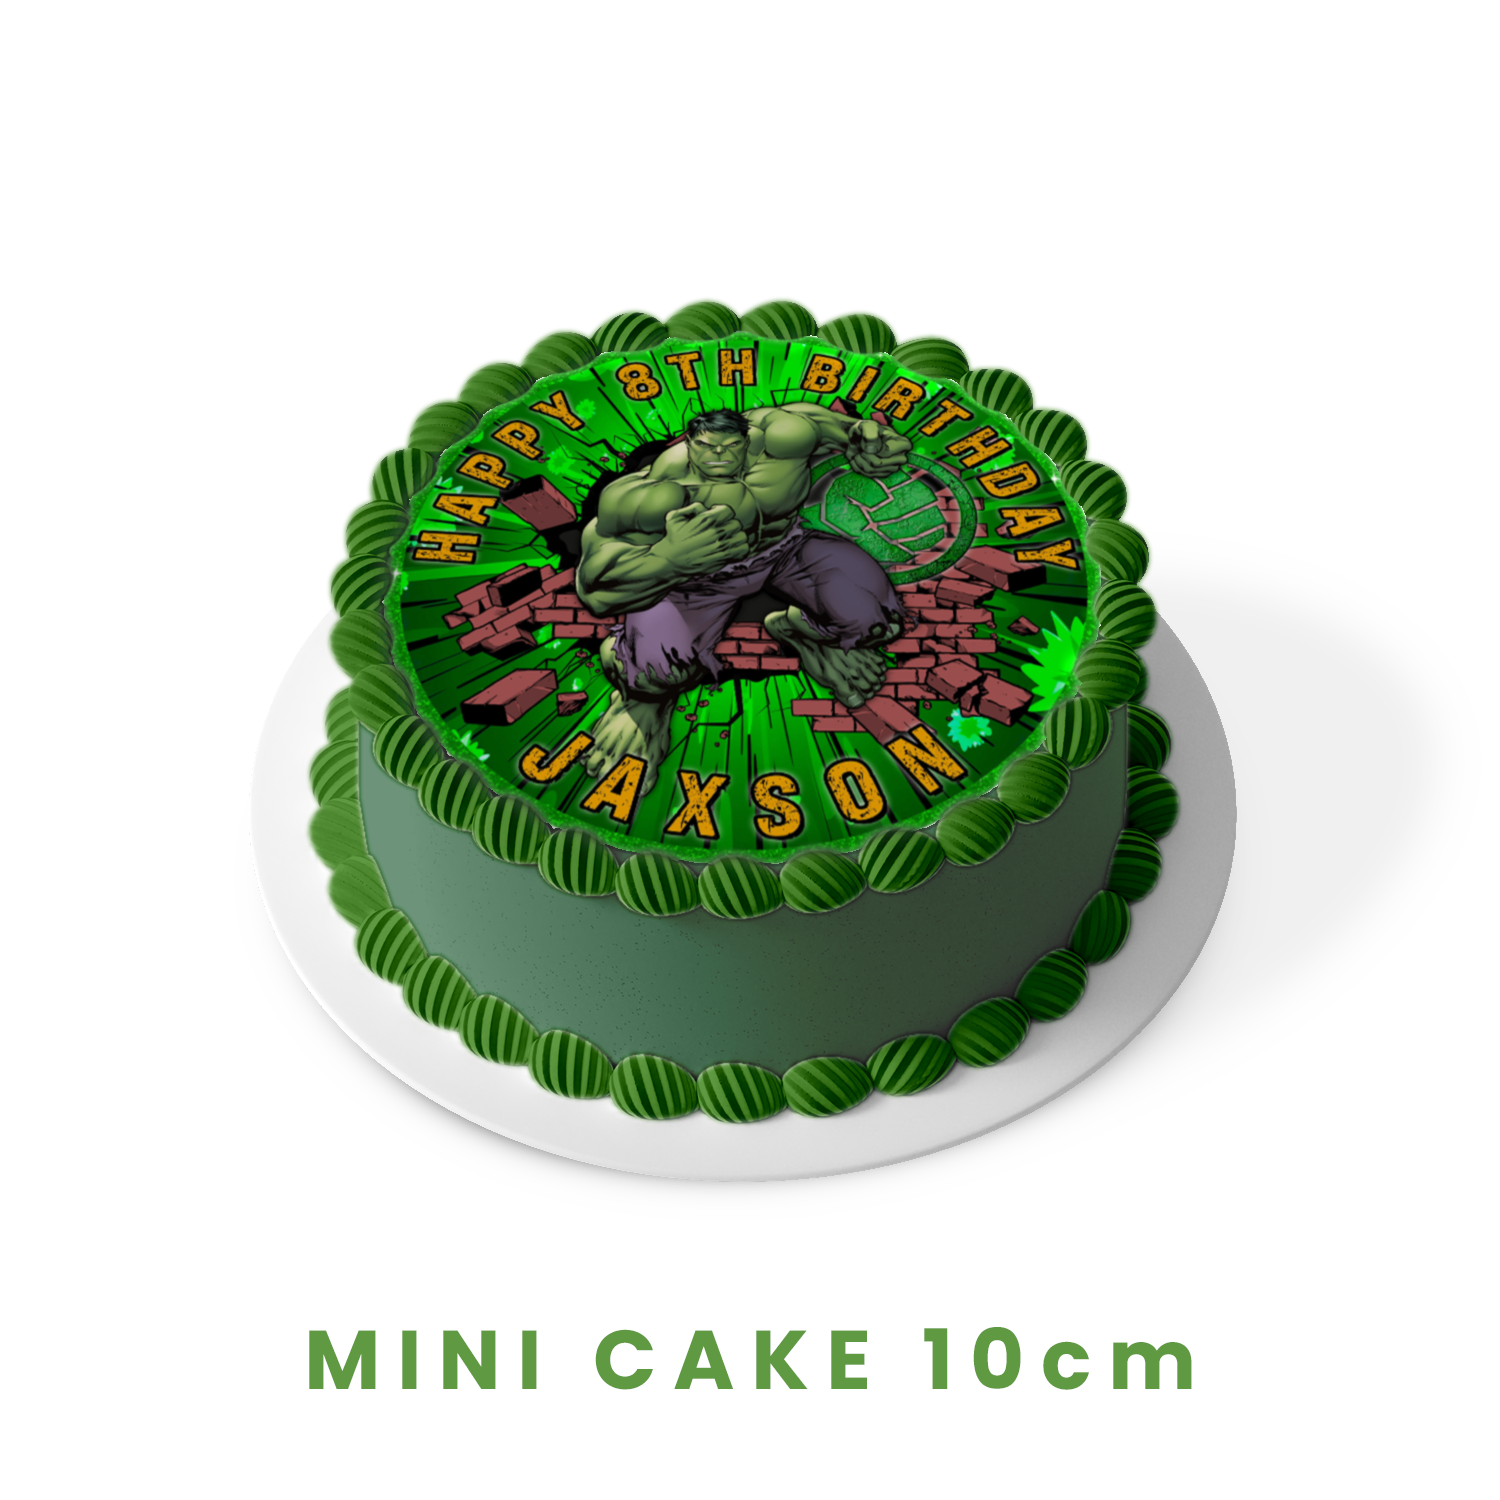 Incredible Hulk Fist Smash Cake - The Great British Bake Off | The Great  British Bake Off